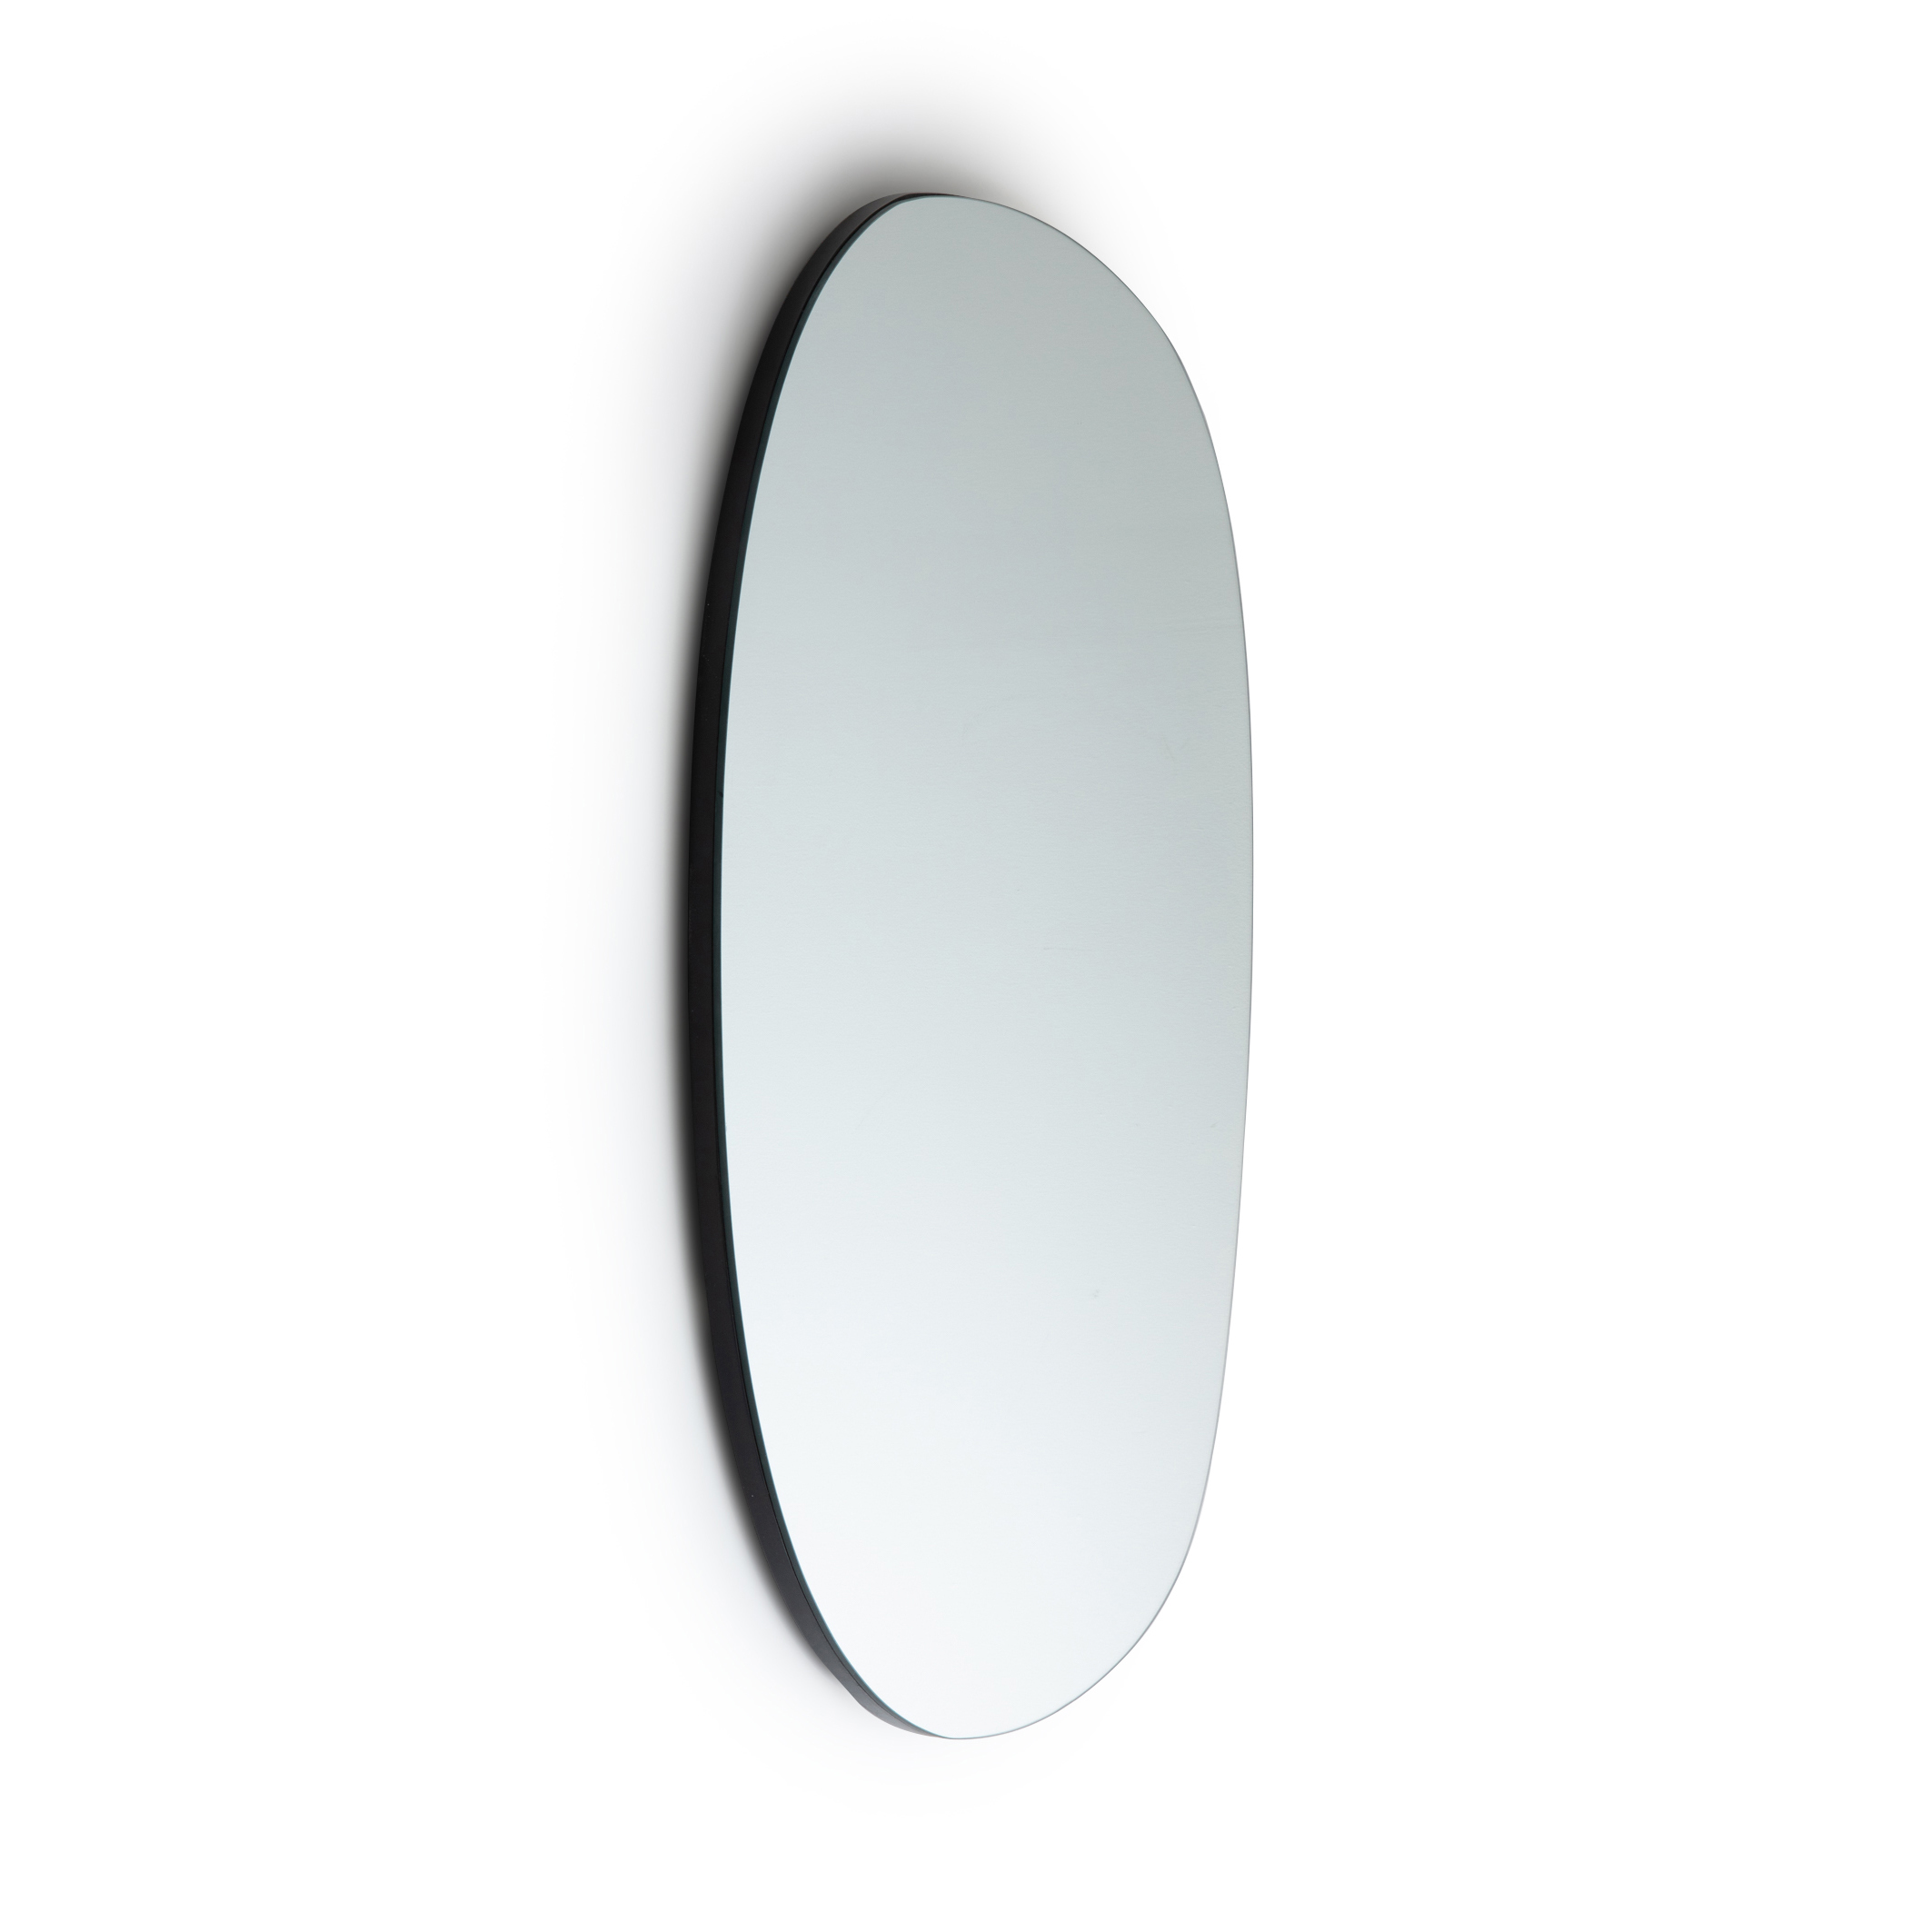 Irregular shaped mirrors, pebble, organic mirrors